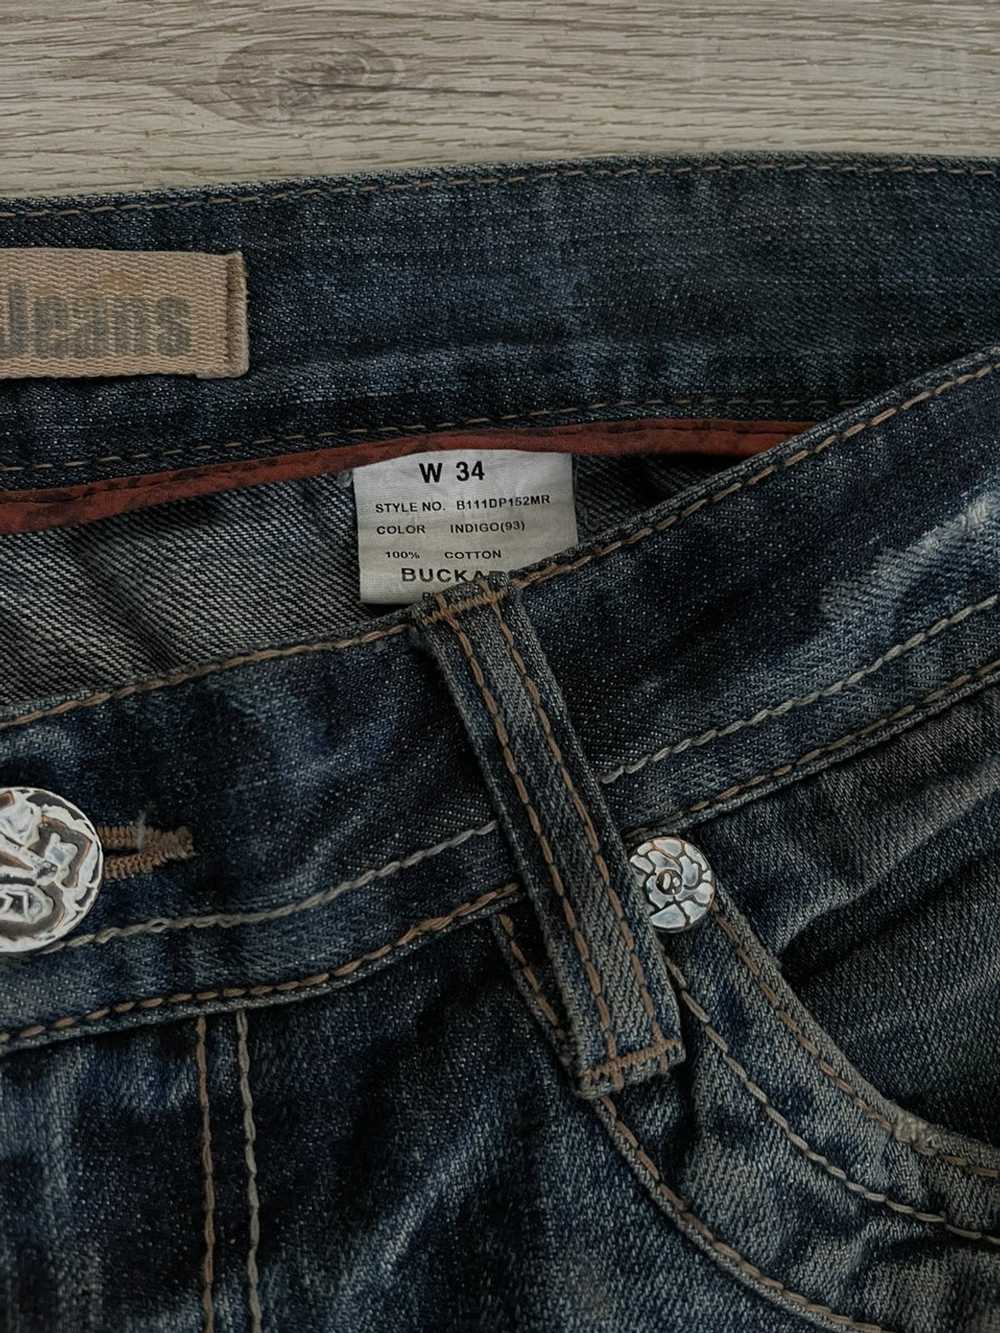 PPFM Buckaroo indigo jeans - image 7